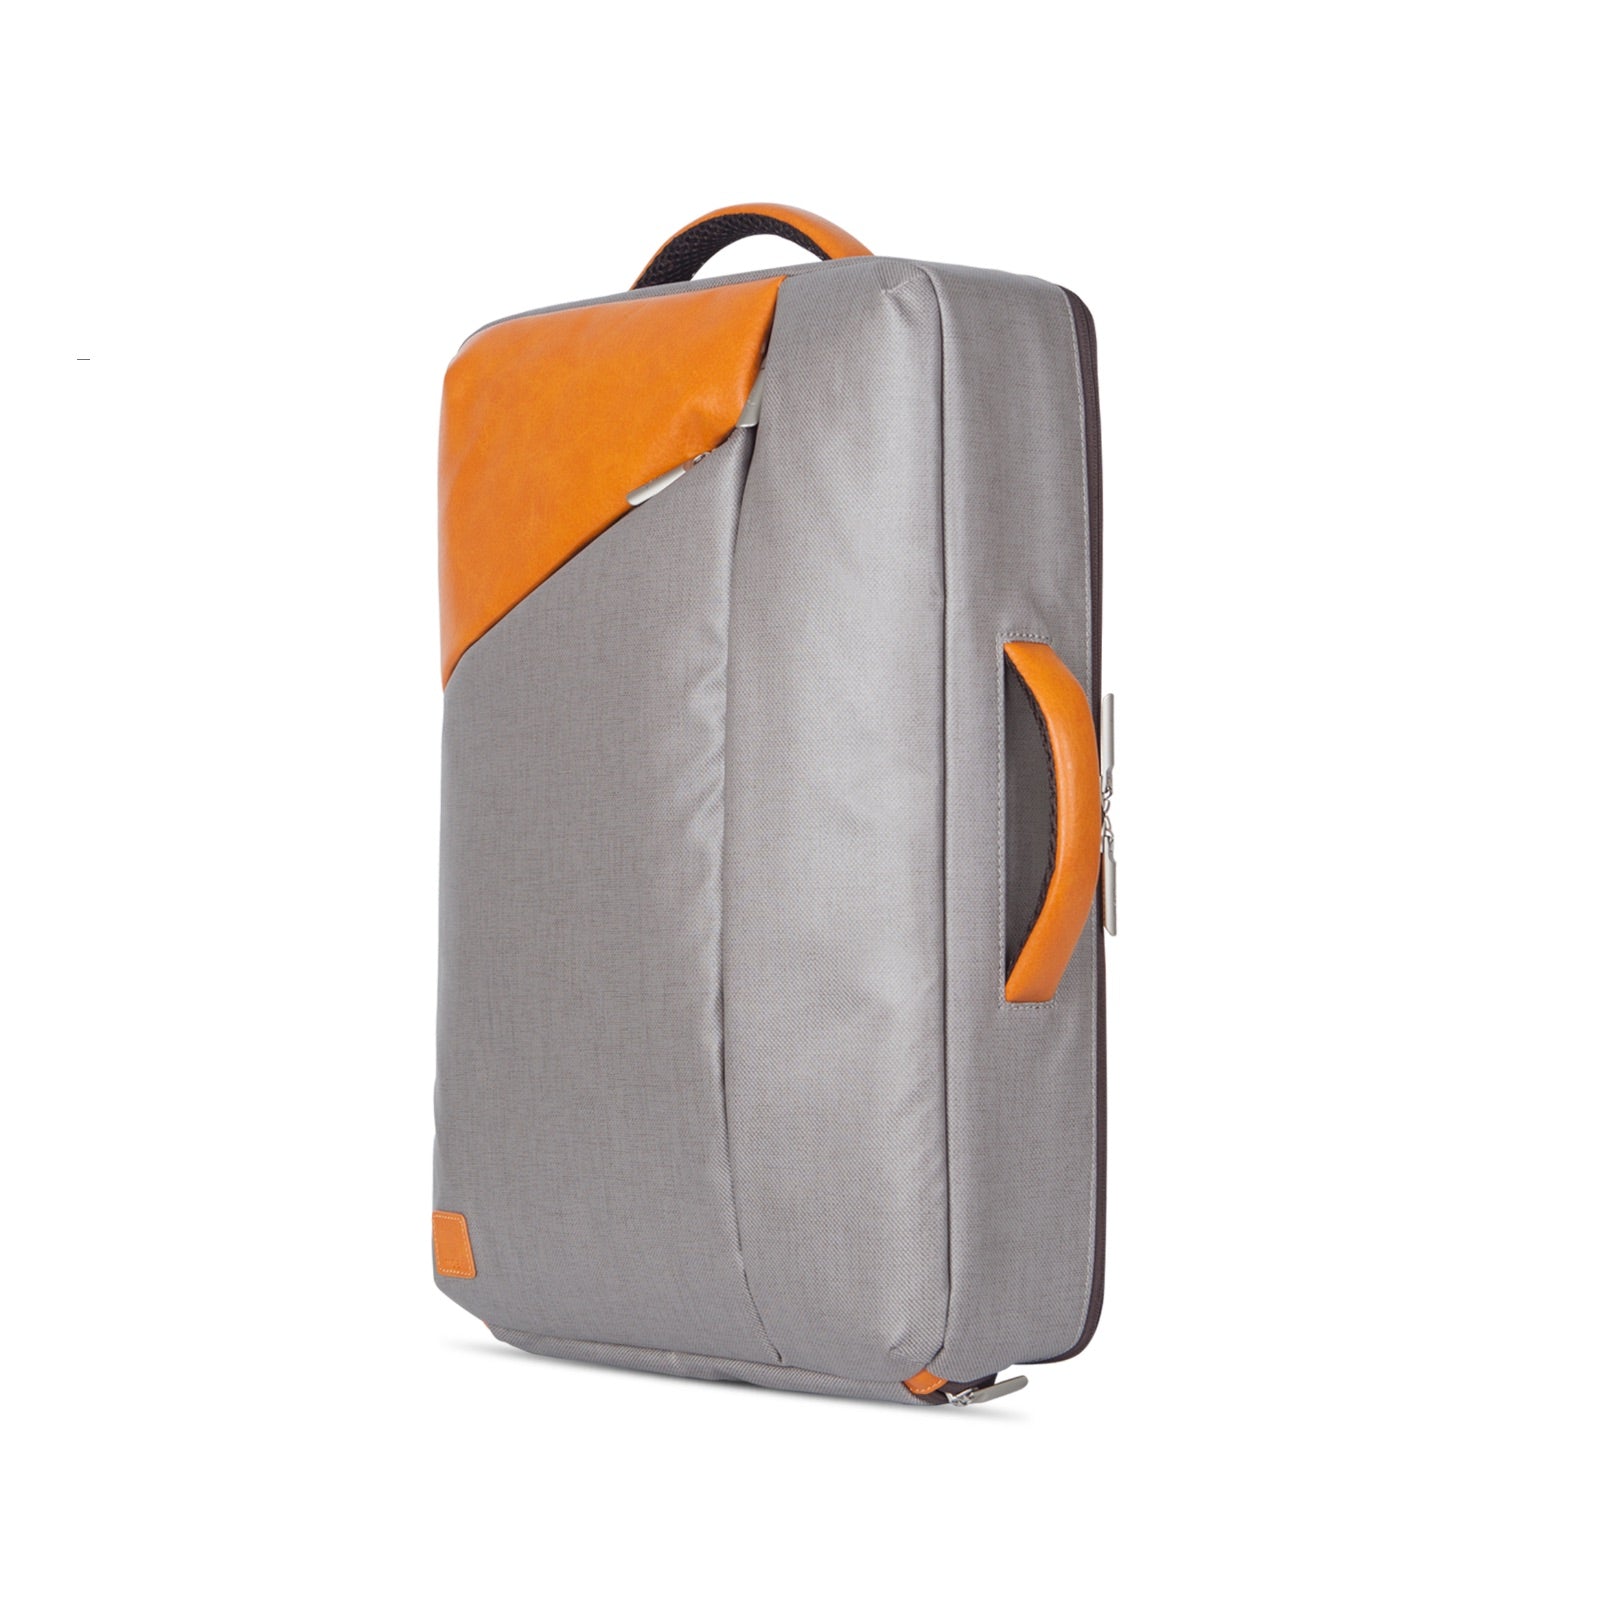 Moshi Aerio Laptop Messenger Bag - Titanium Gray